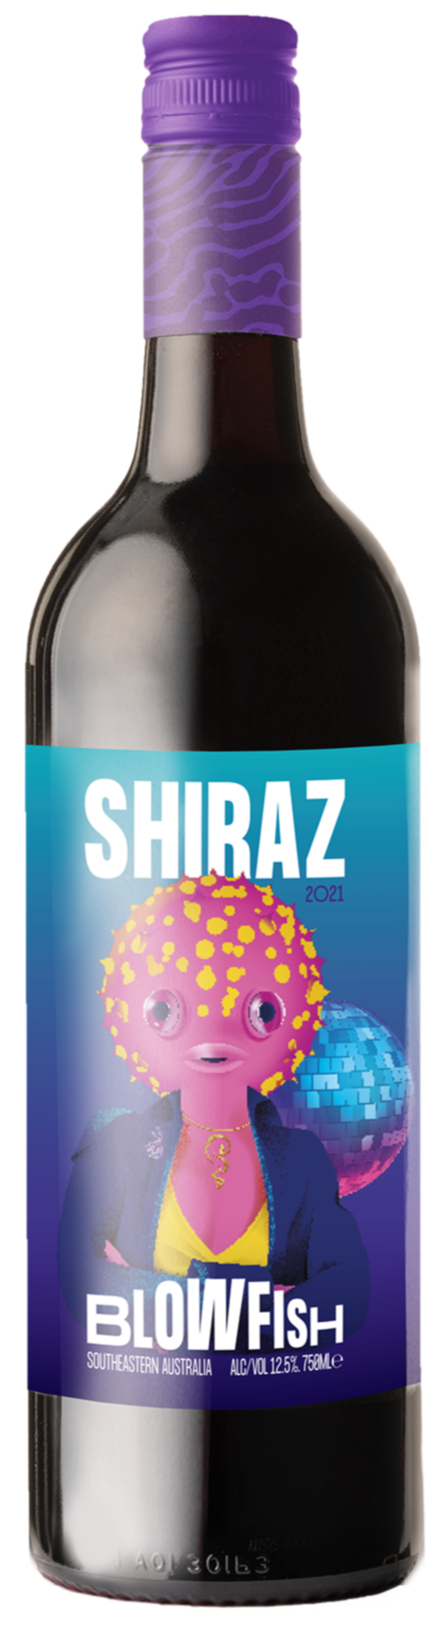 Blowfish Shiraz 2021